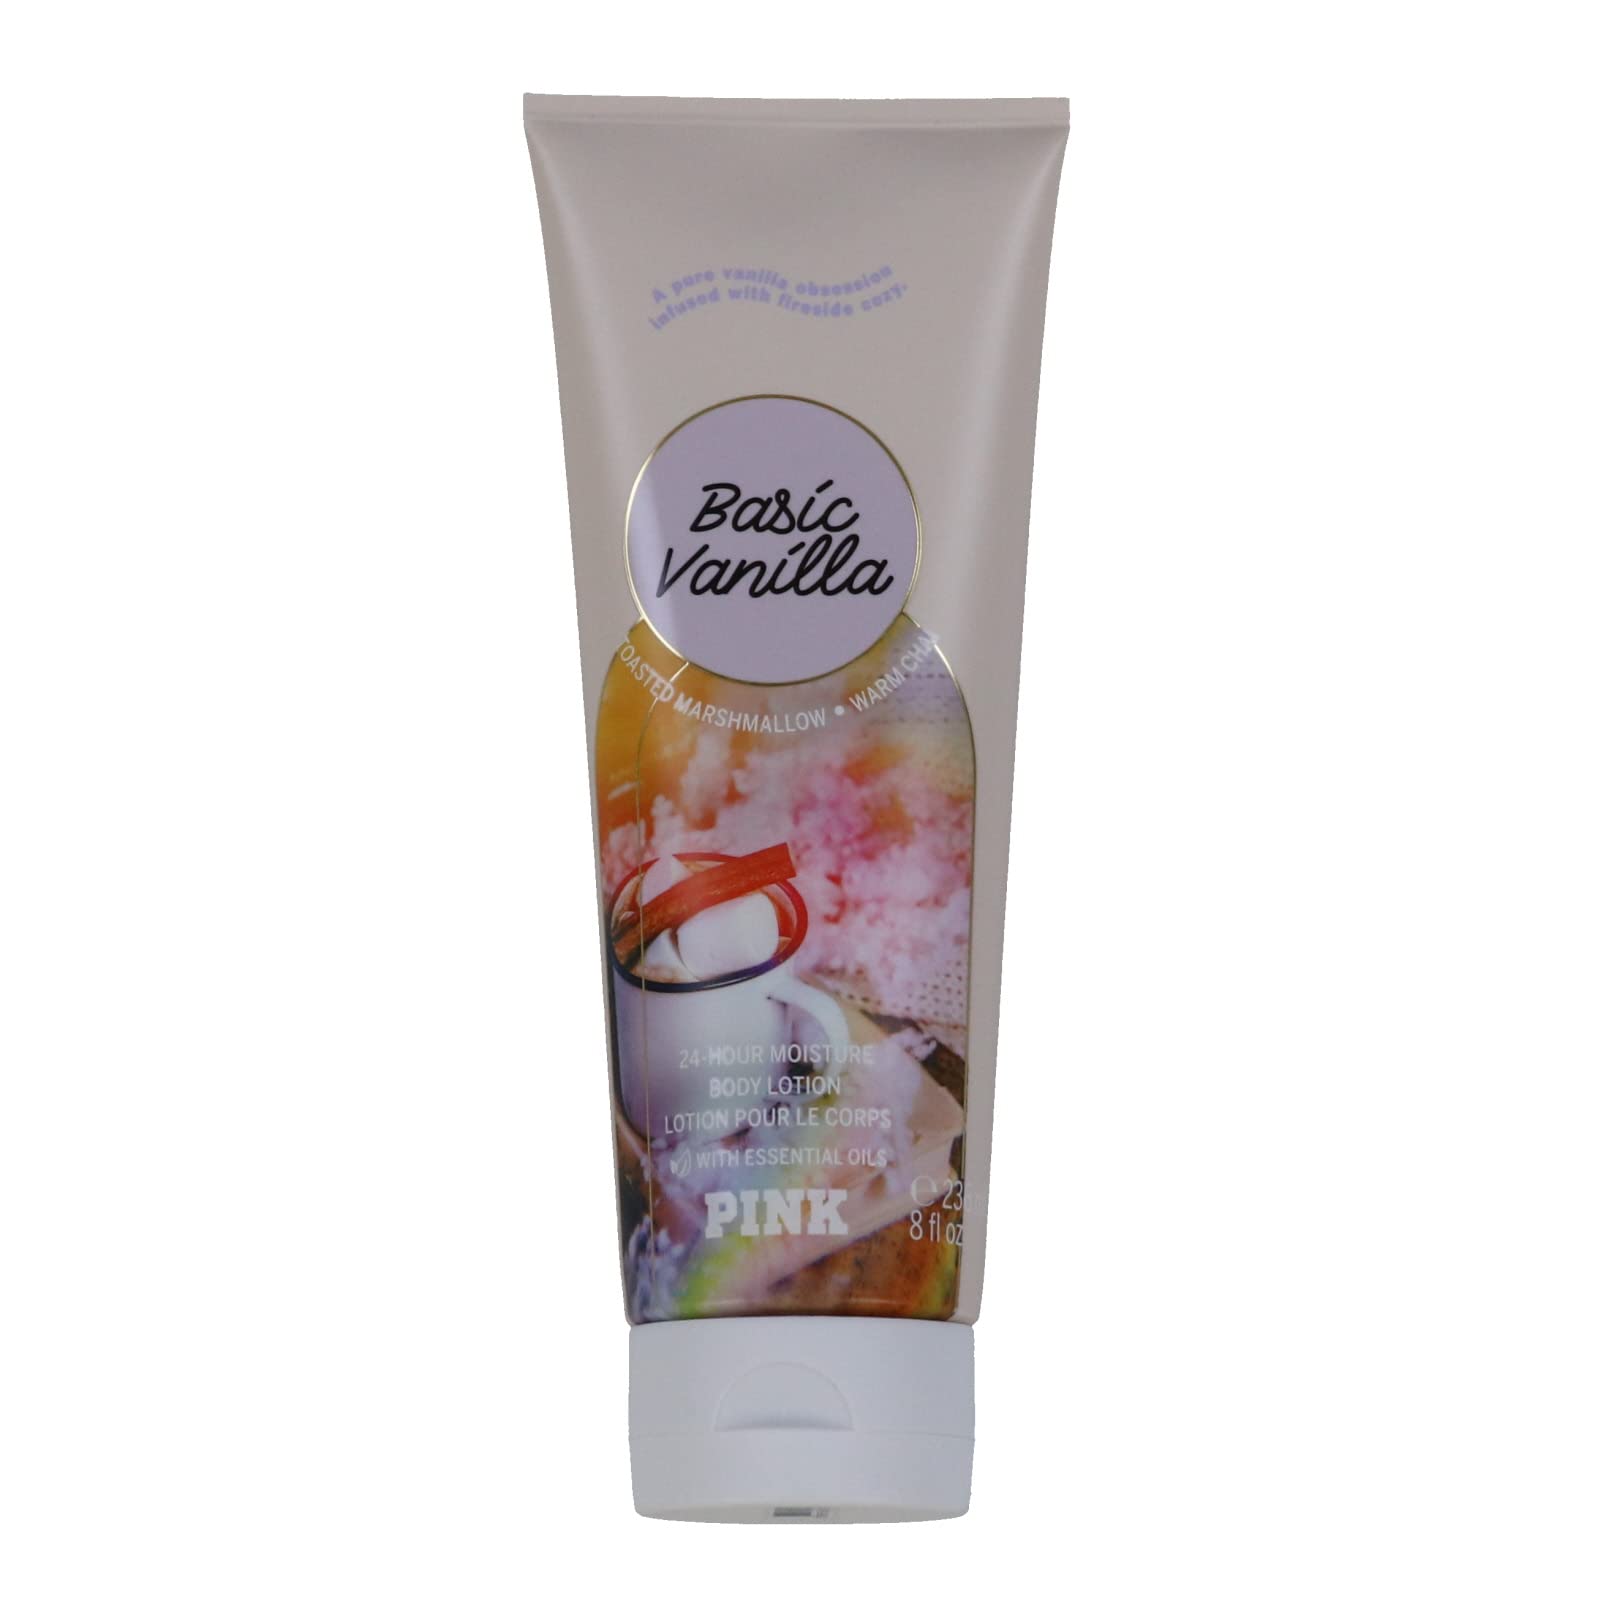 Victoria's Secret Pink Fragrance Lotion (Basic Vanilla), 8 Fl Oz (Pack of 1)